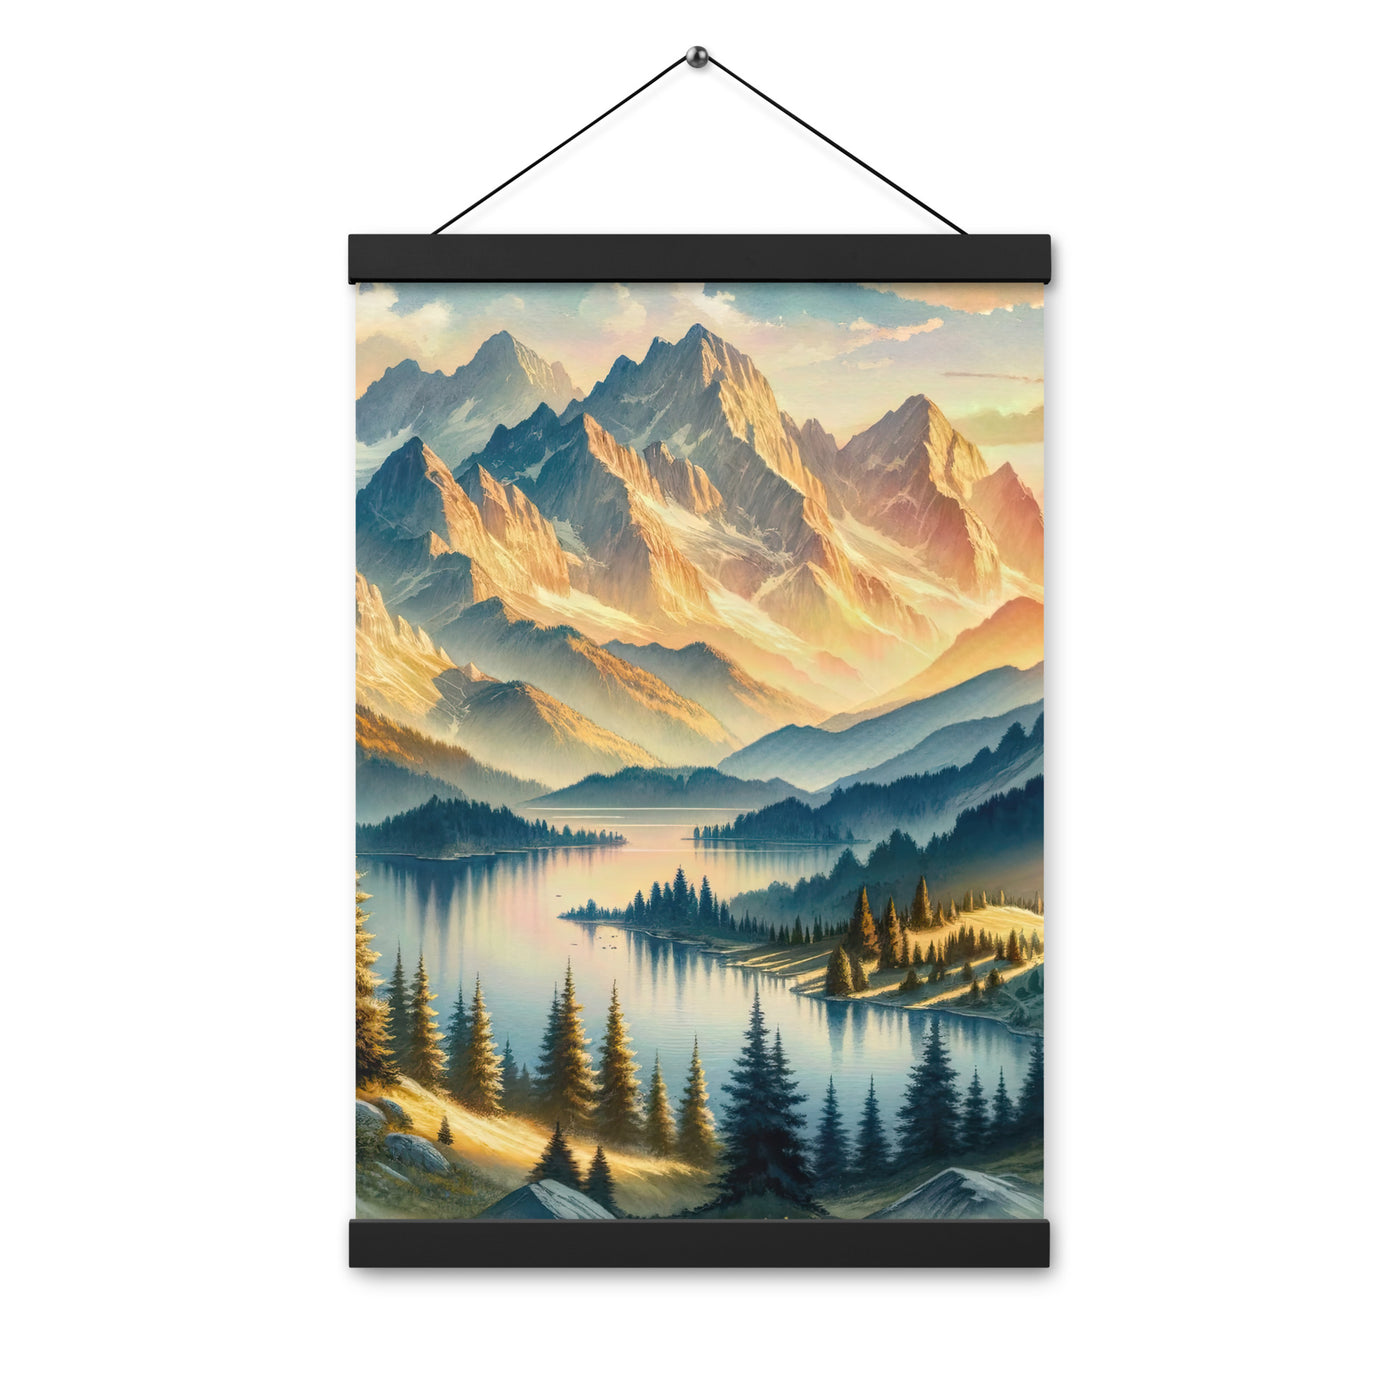 Aquarell der Alpenpracht bei Sonnenuntergang, Berge im goldenen Licht - Premium Poster mit Aufhängung berge xxx yyy zzz 30.5 x 45.7 cm